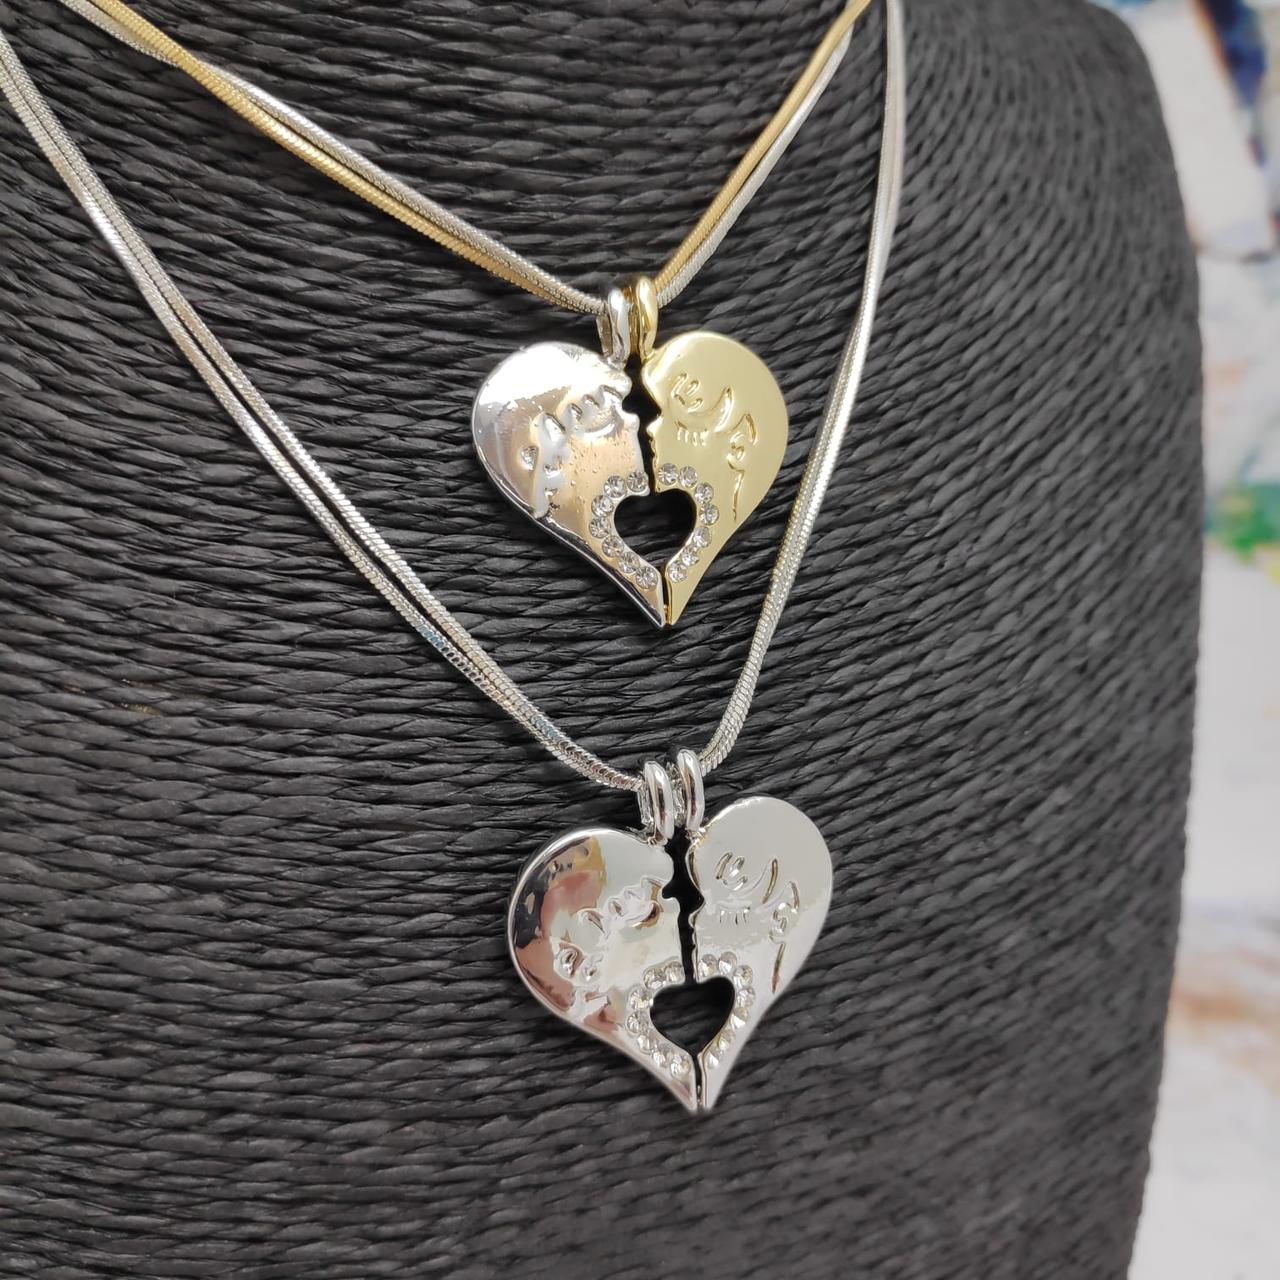 Парная подвеска Сердце на цепочках (2 цепочки, 2 половинки сердца) Золото - Серебро